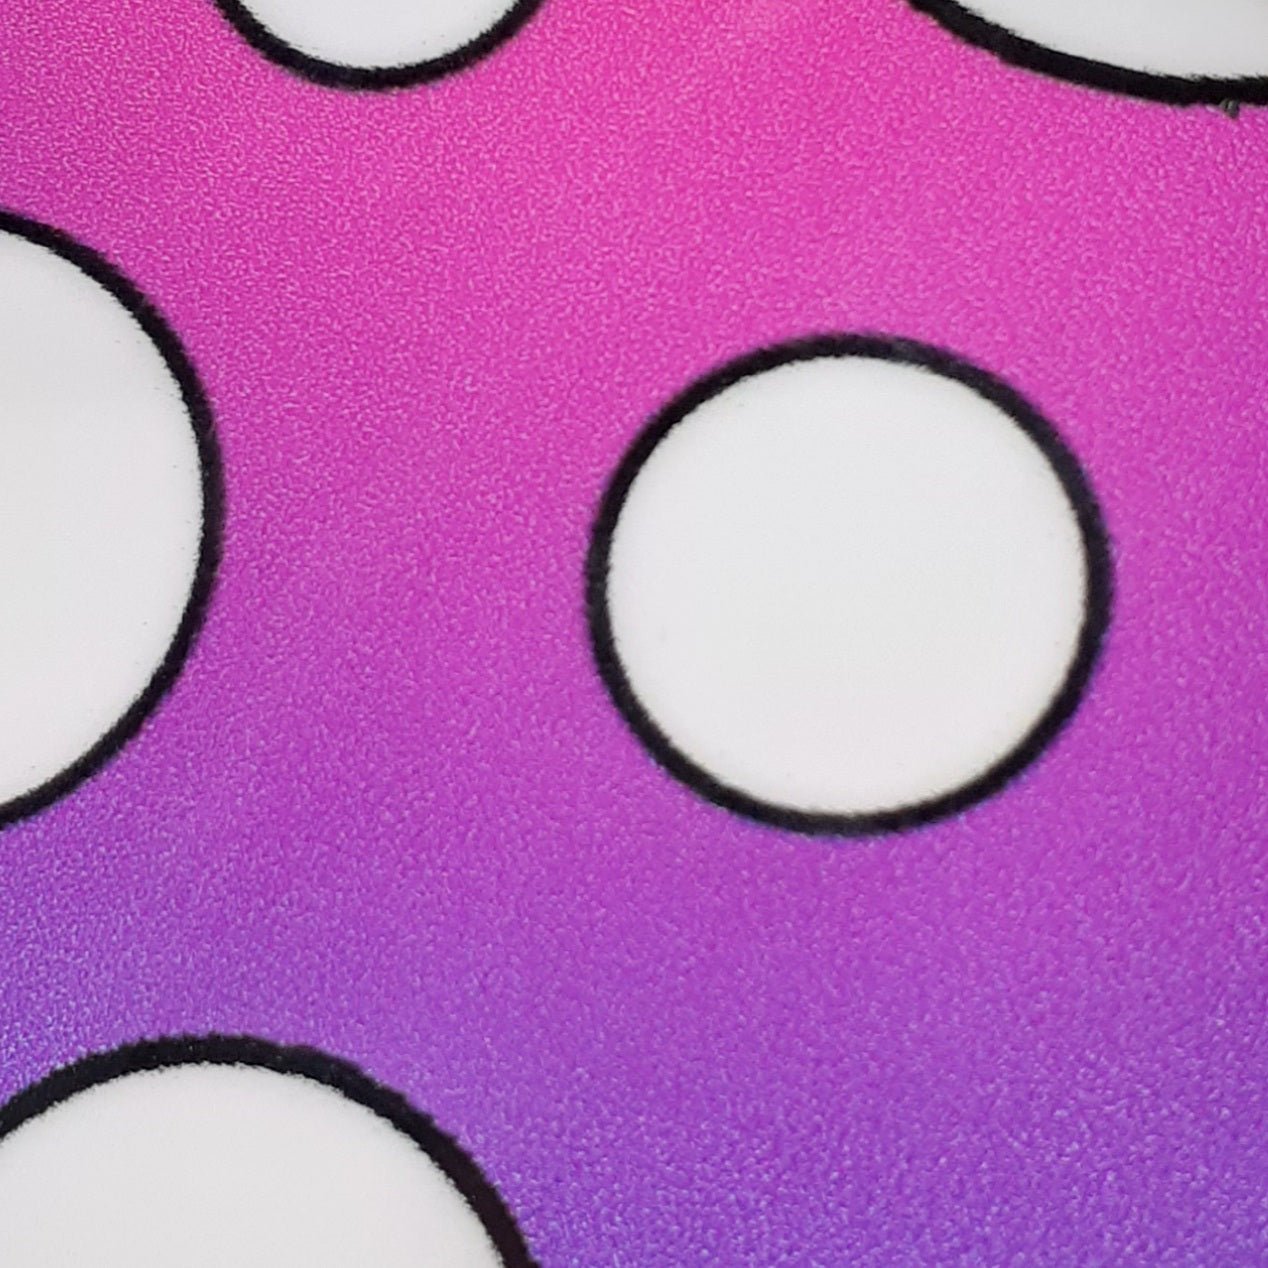 3” Mushroom Sticker, Purple pink , white spots, Waterproof - LumiFae